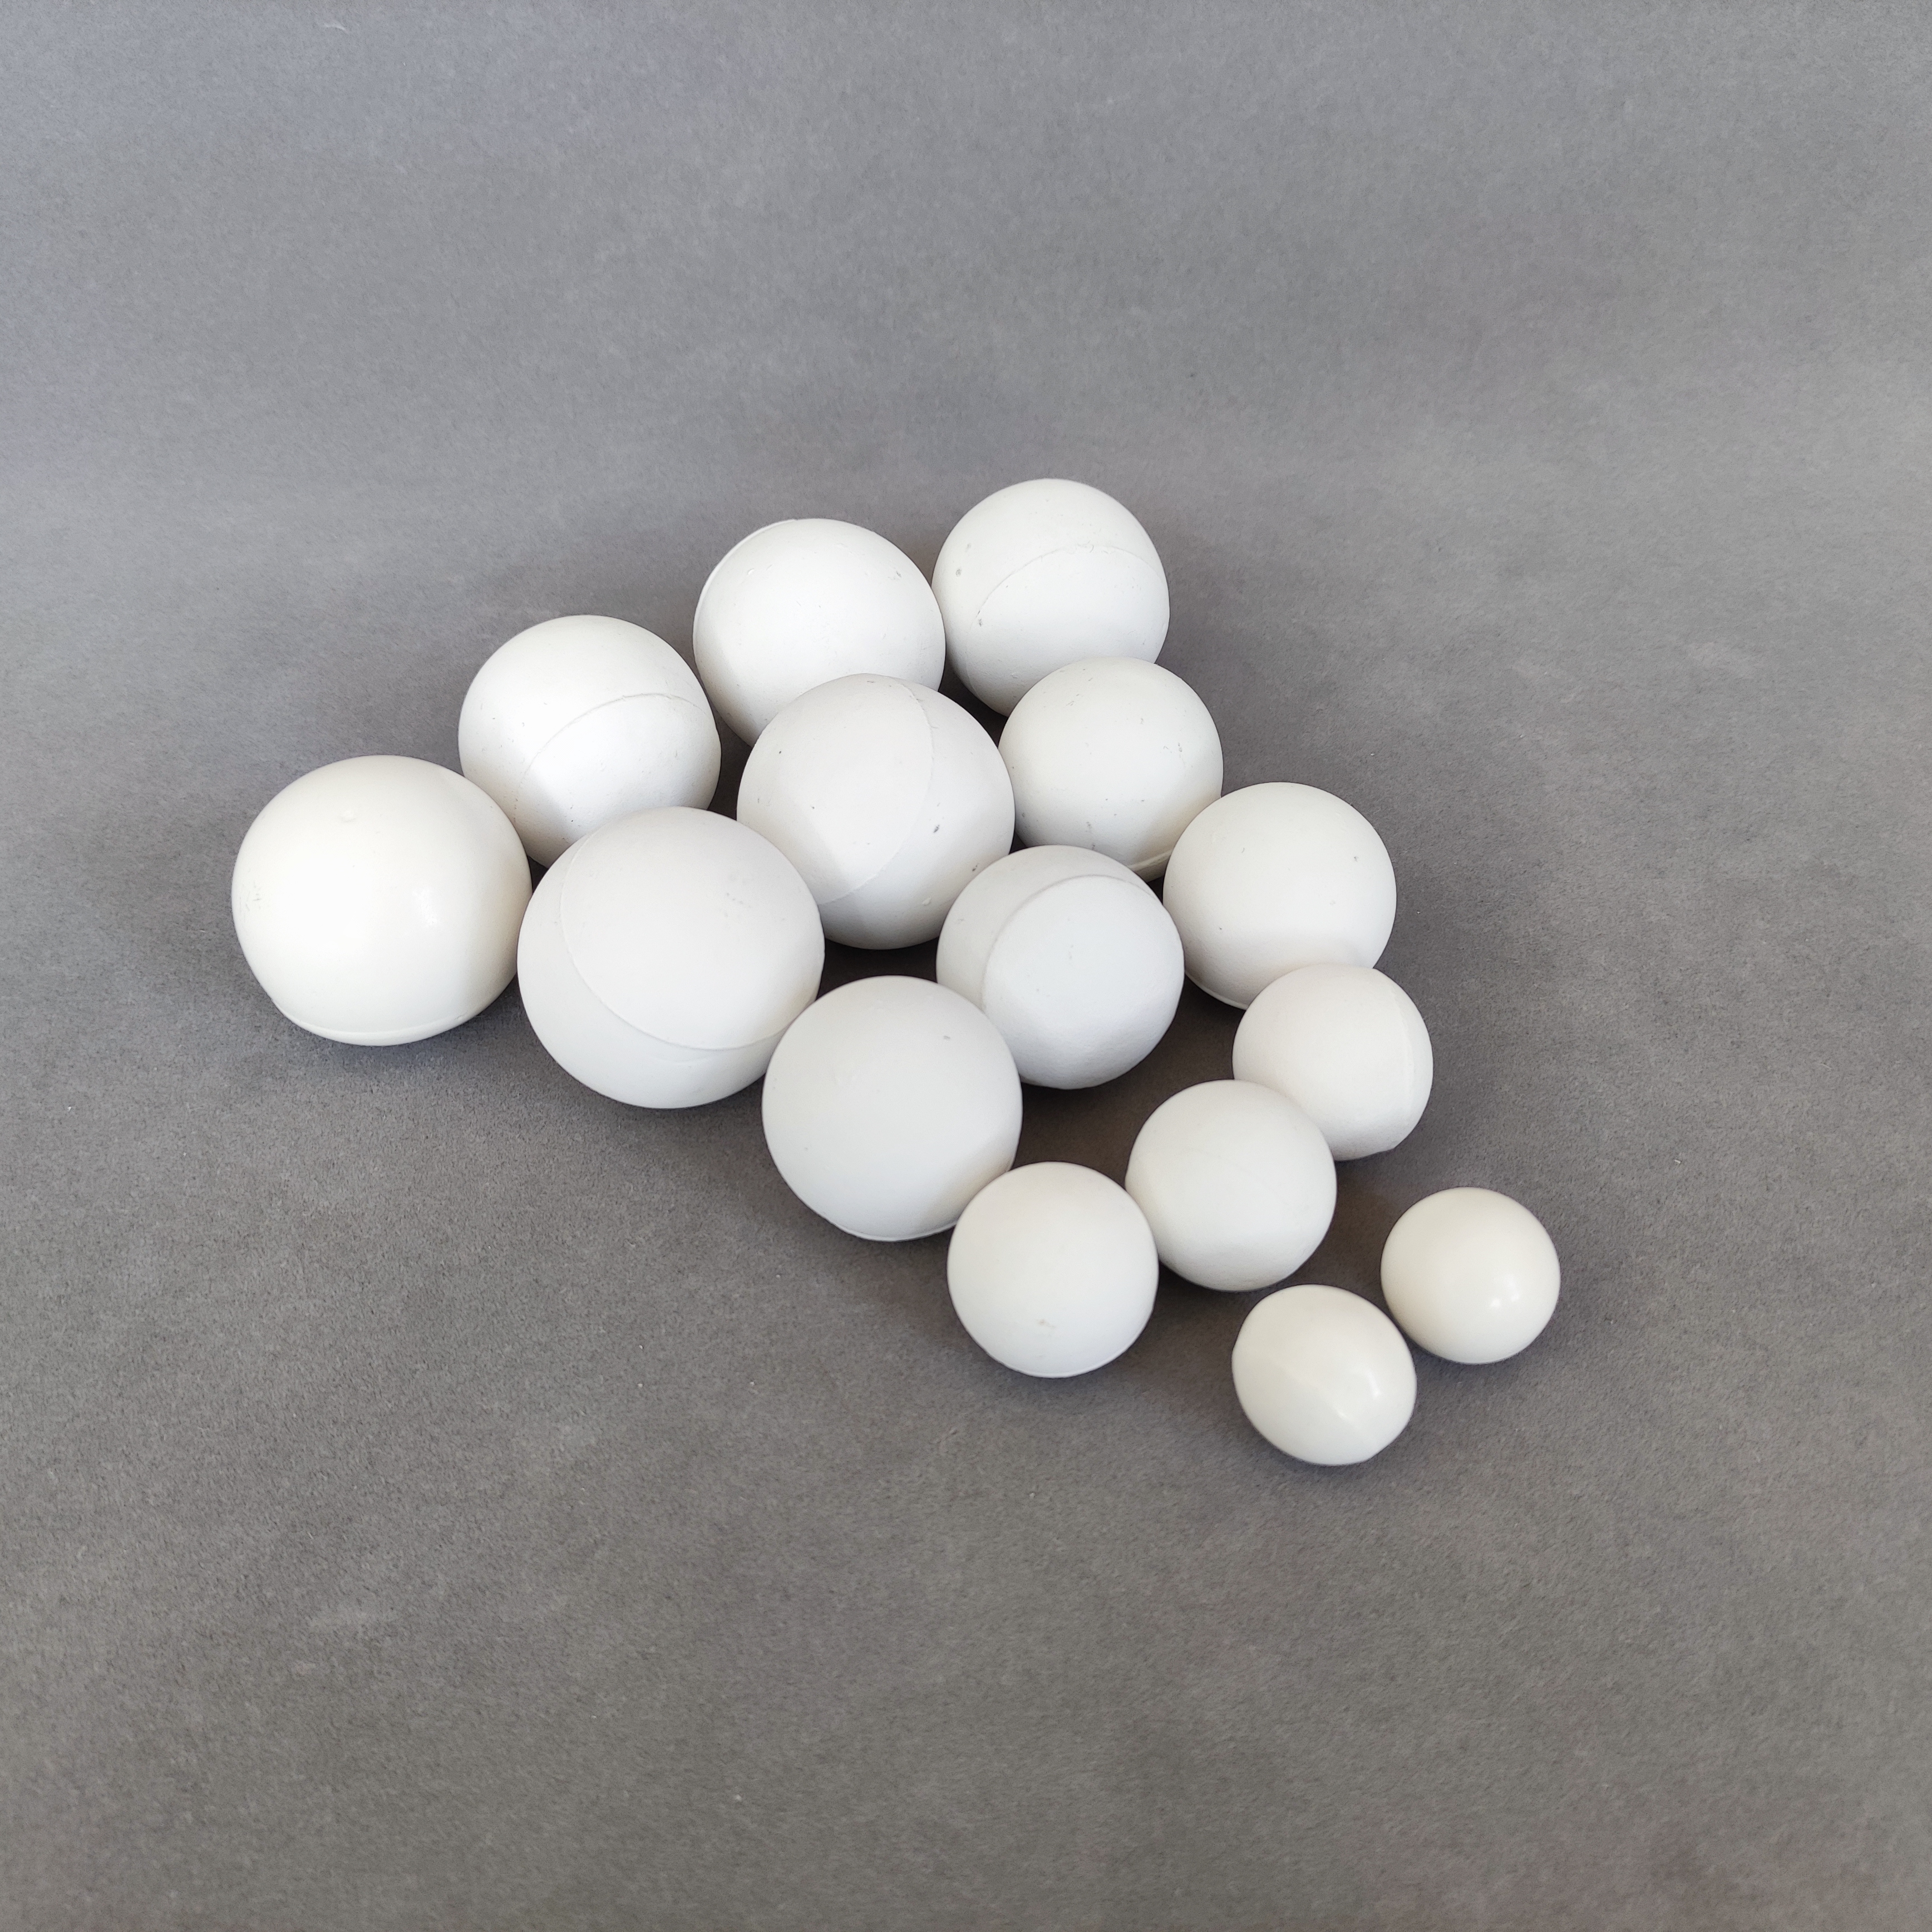 92% alumina ball from Gaoteng